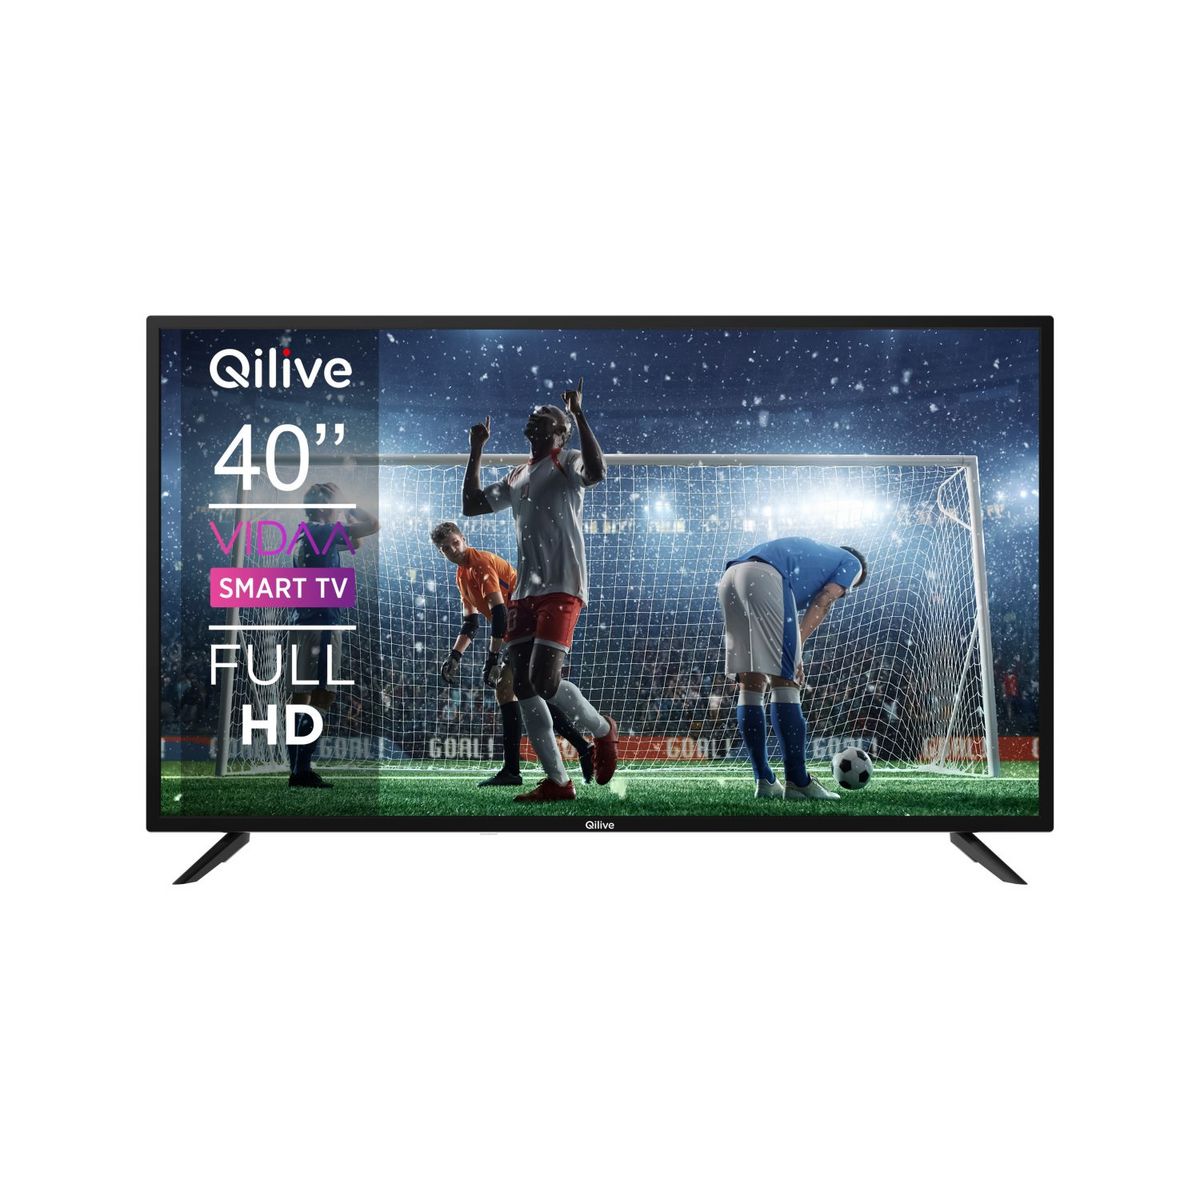 QILIVE Q40FS232B TV DLED Full HD 101 cm Smart TV pas cher 